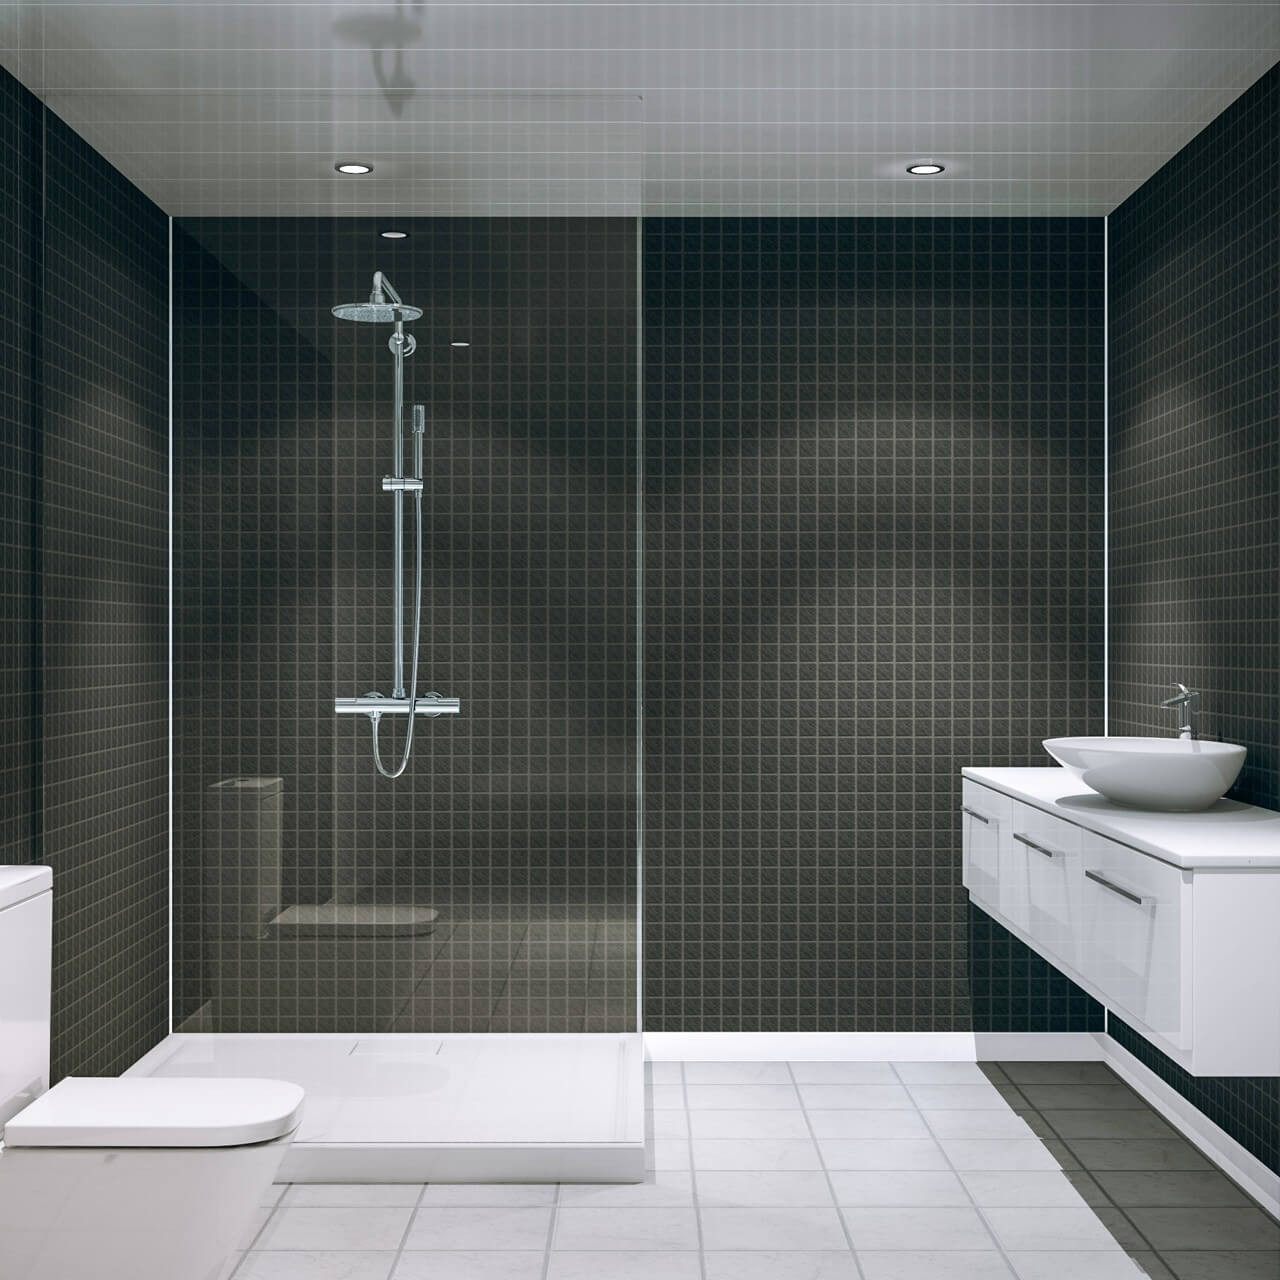 Bathroom Wall Panels
 15 Modern Bathroom Wall Panels for Your Home Interior